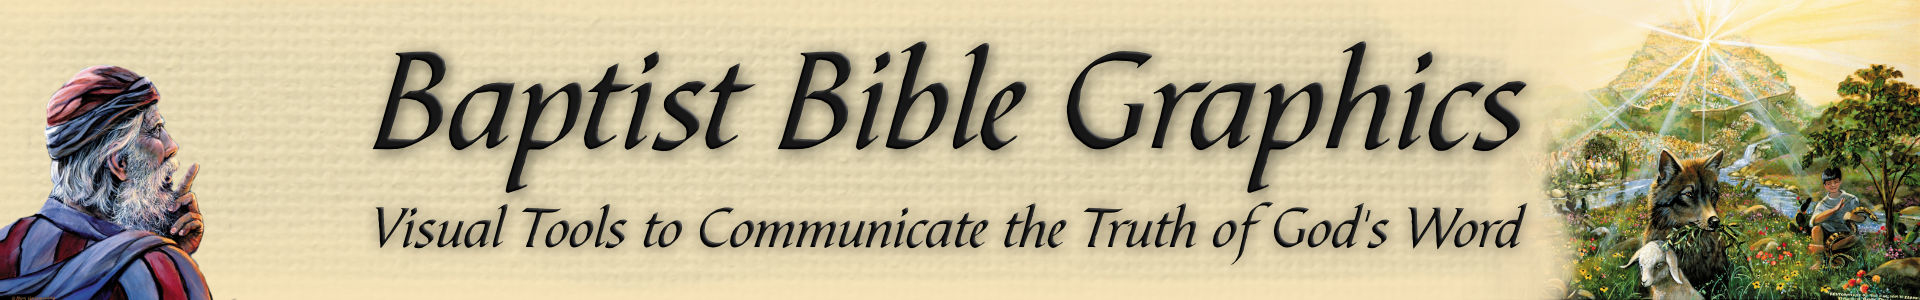 Baptist Bible Graphics